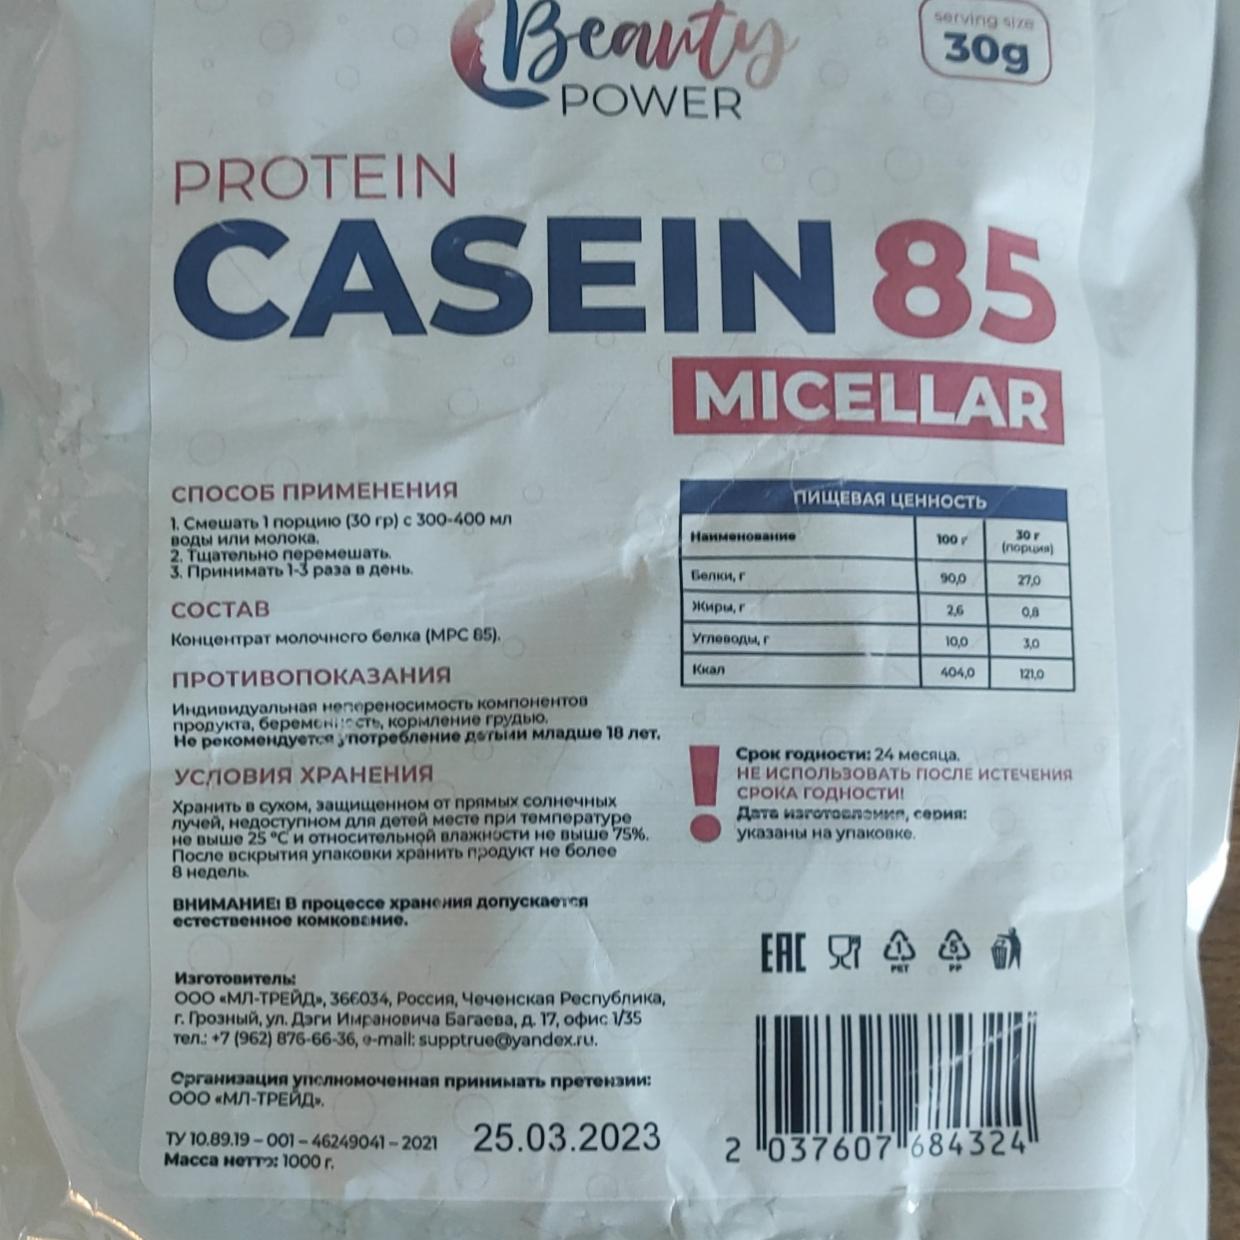 Фото - Протеин казеиновый casein 85 micellar Beauty power